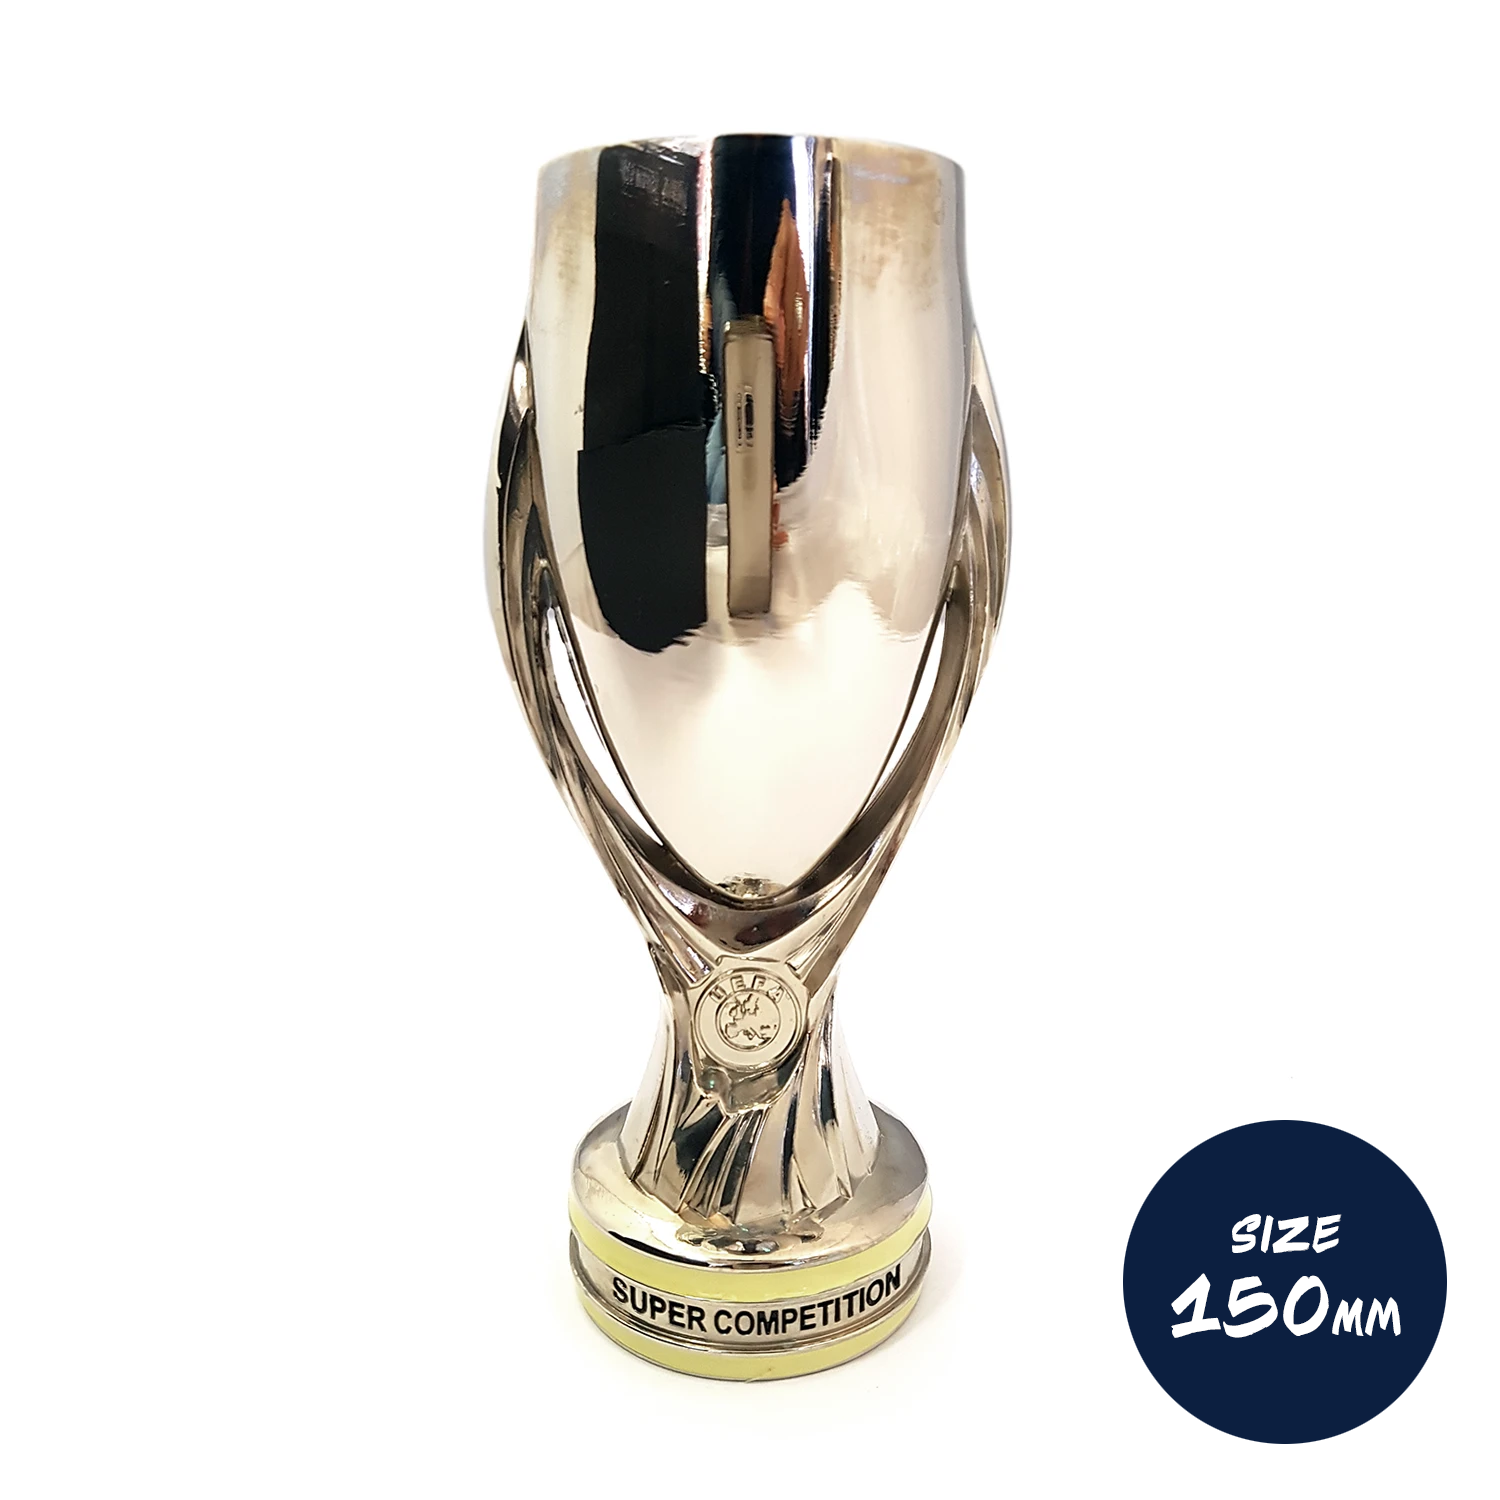 Trophy Replica 150 mm on Acrylic Pedestal; UEFA Champions League